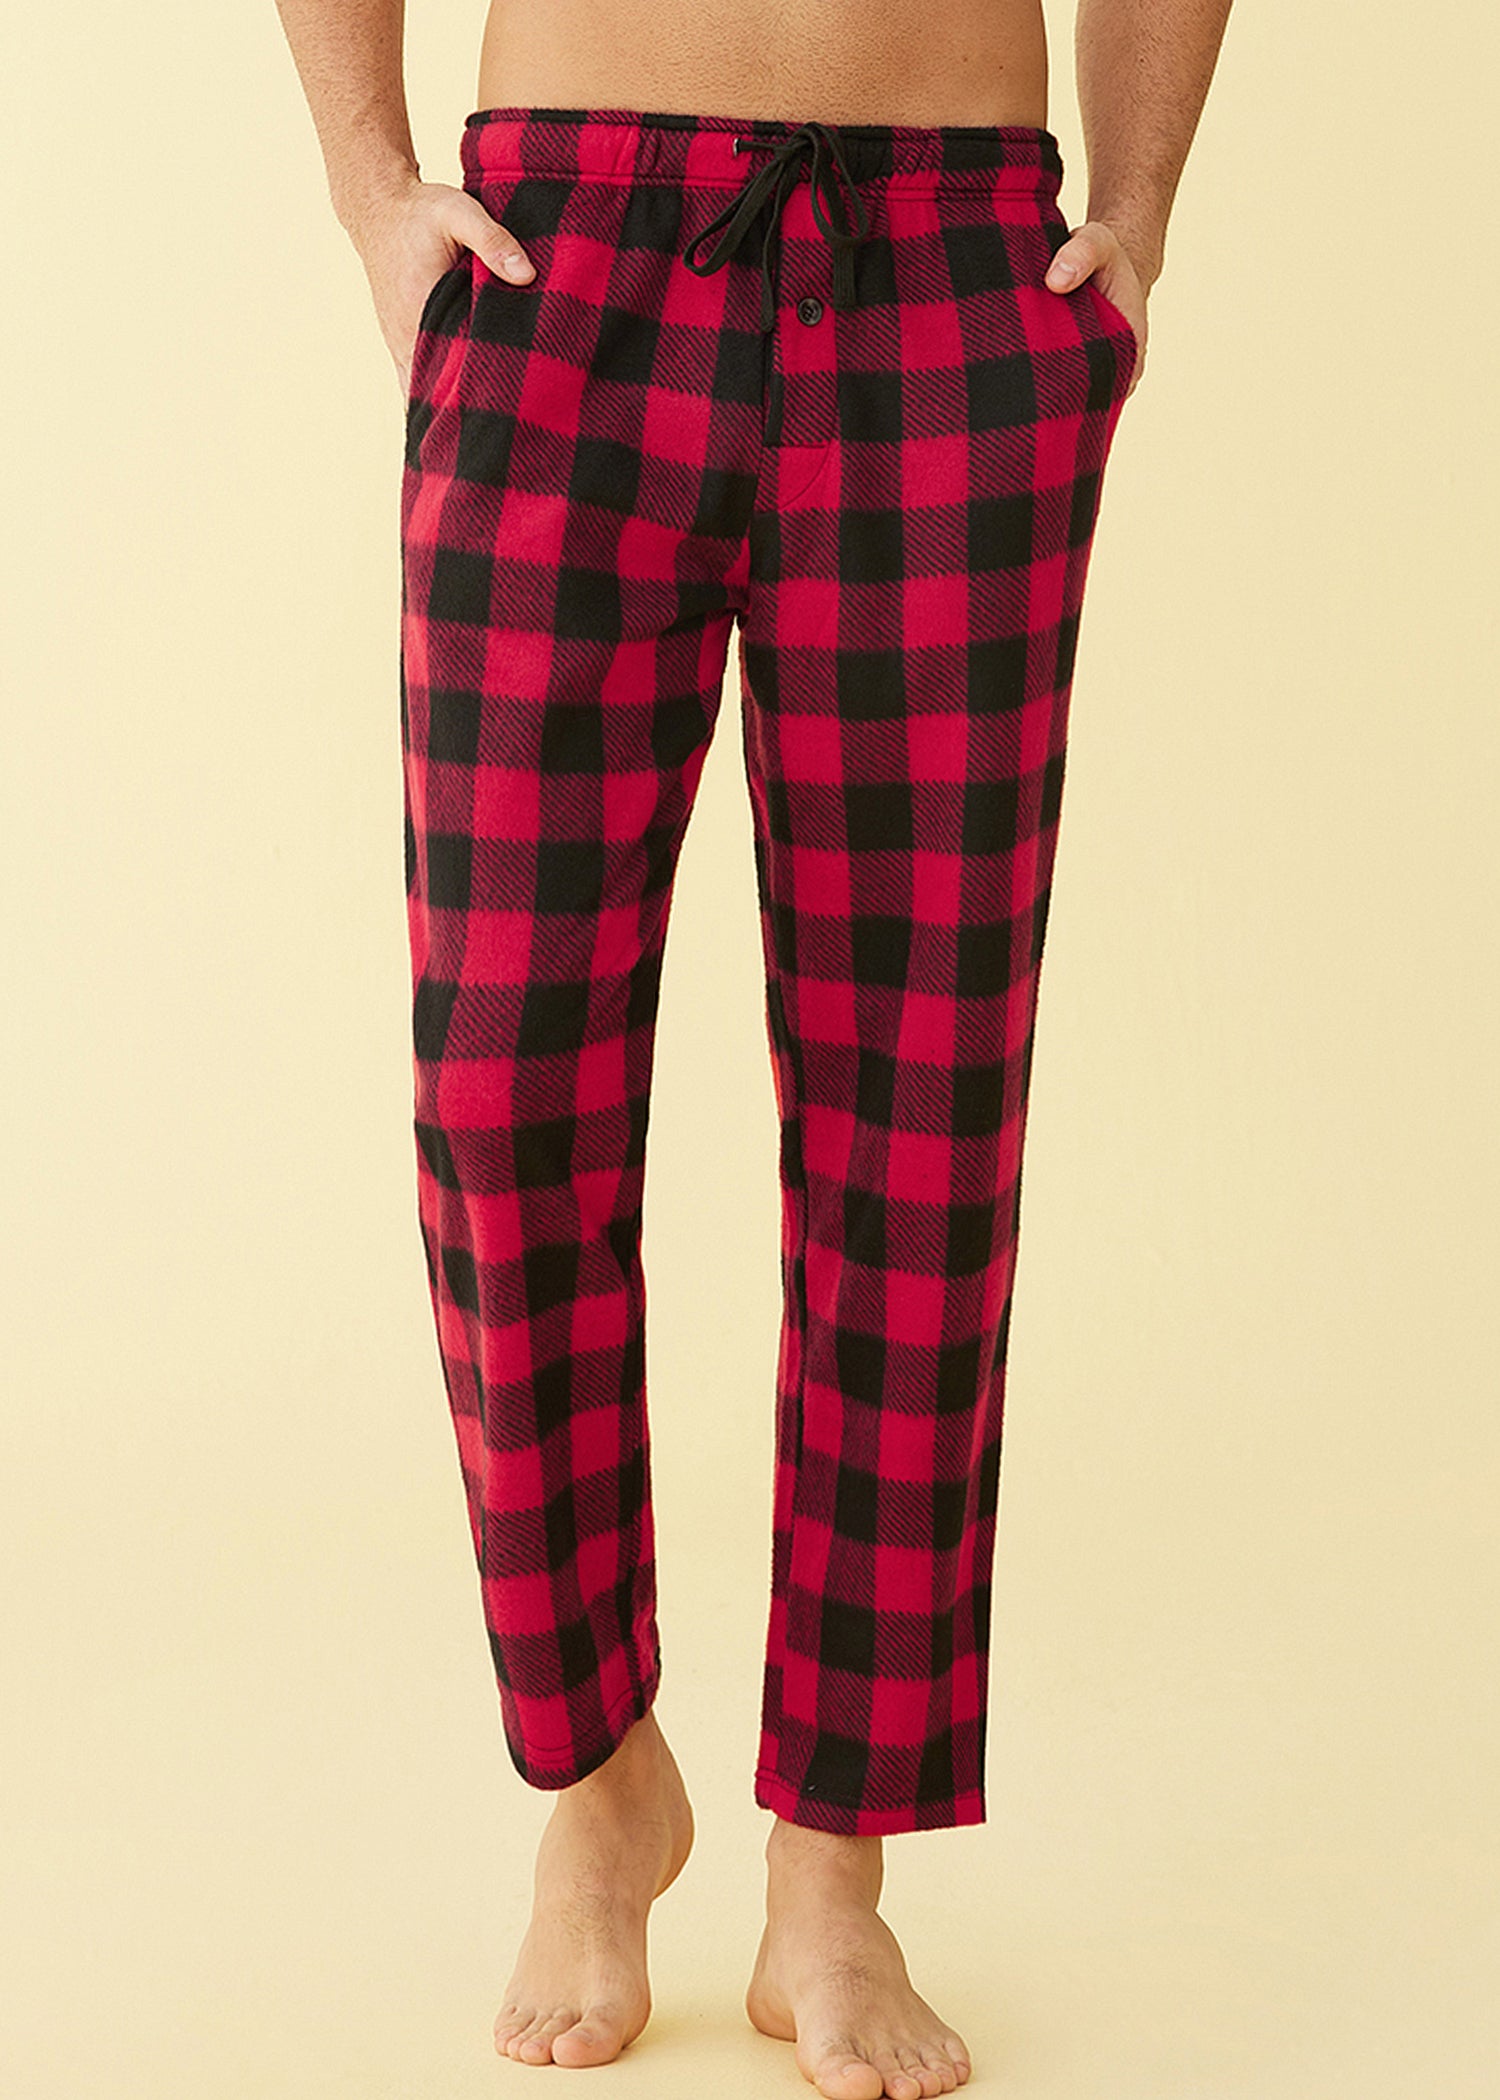 Men's Flannel Pajamas - Plaid Pajama Pants for Men (Black / Red - Buffalo  Plaid, Medium)